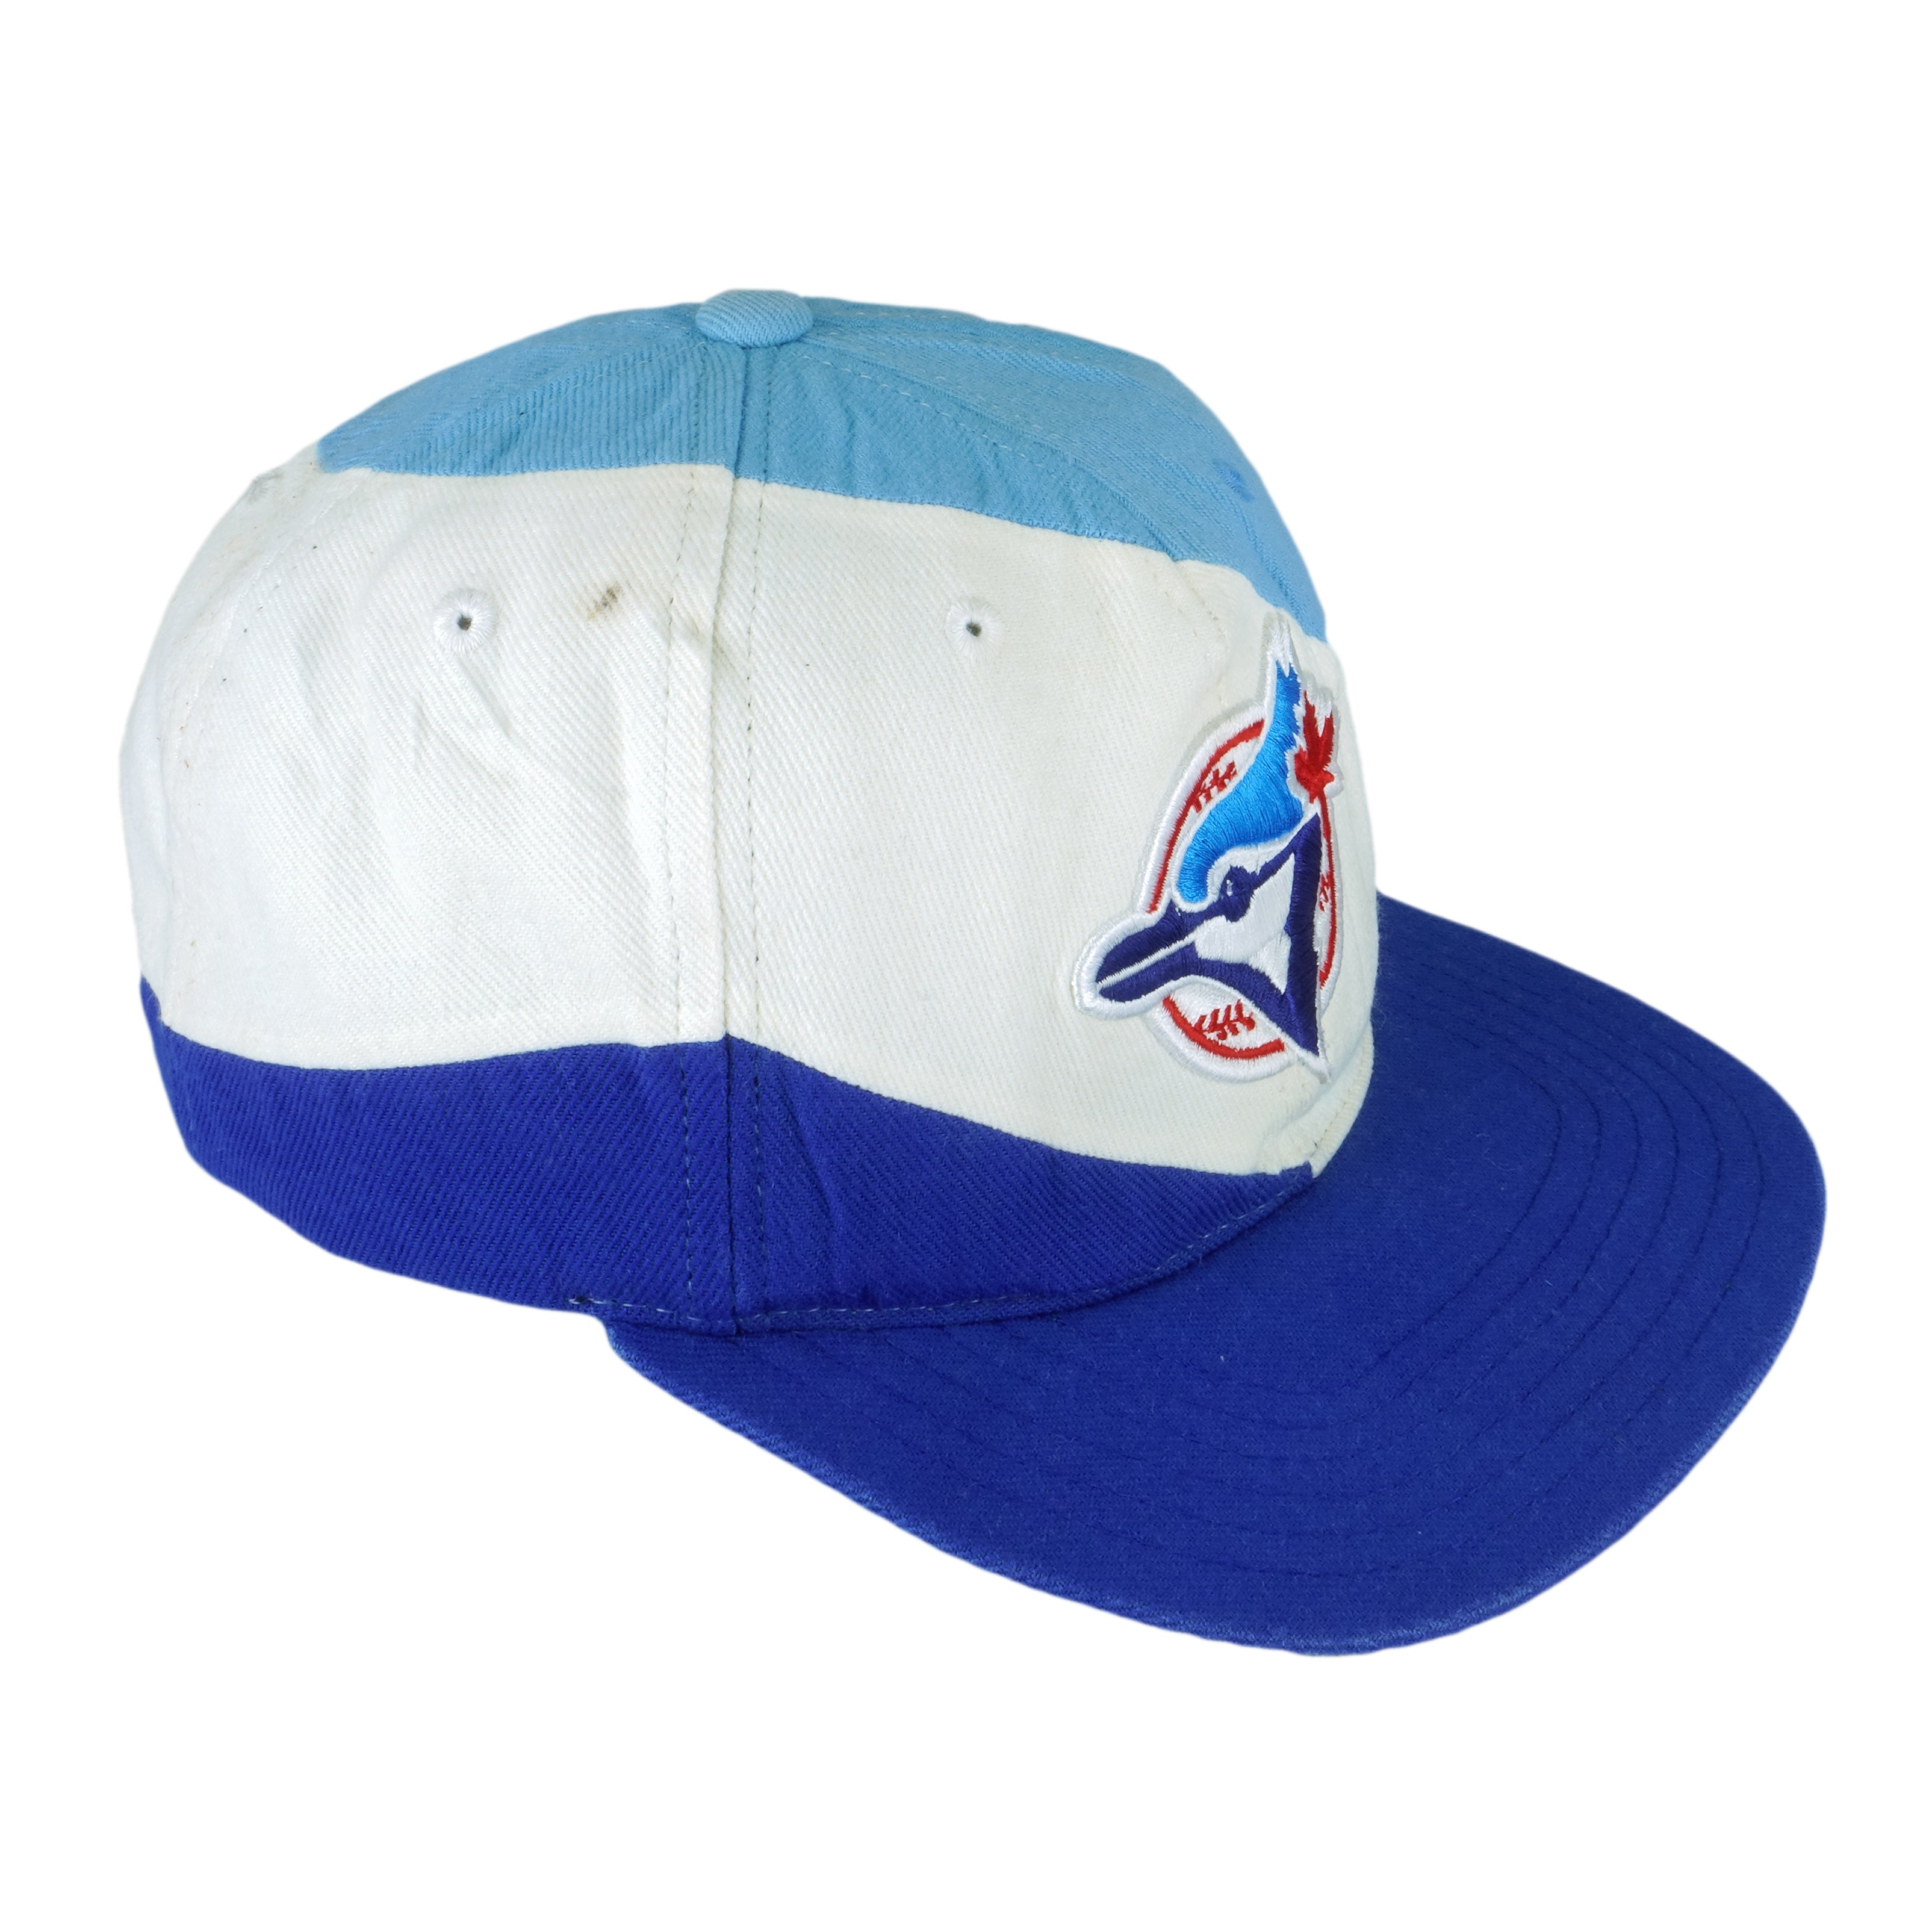 Vintage MLB (American Needle) - Toronto Blue Jays Cooperstown